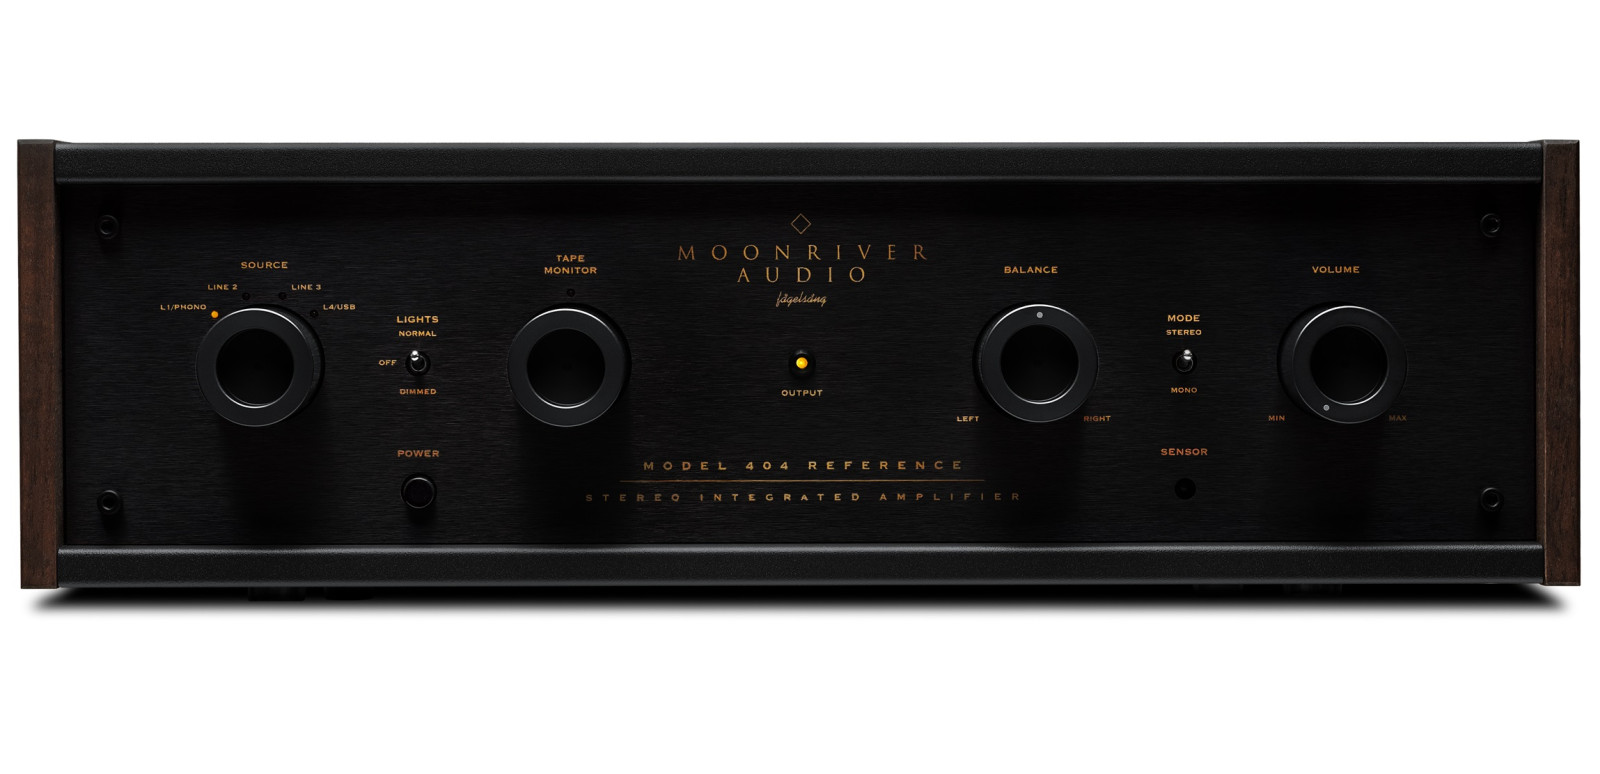 MoonRiver Audio Model-404 Reference